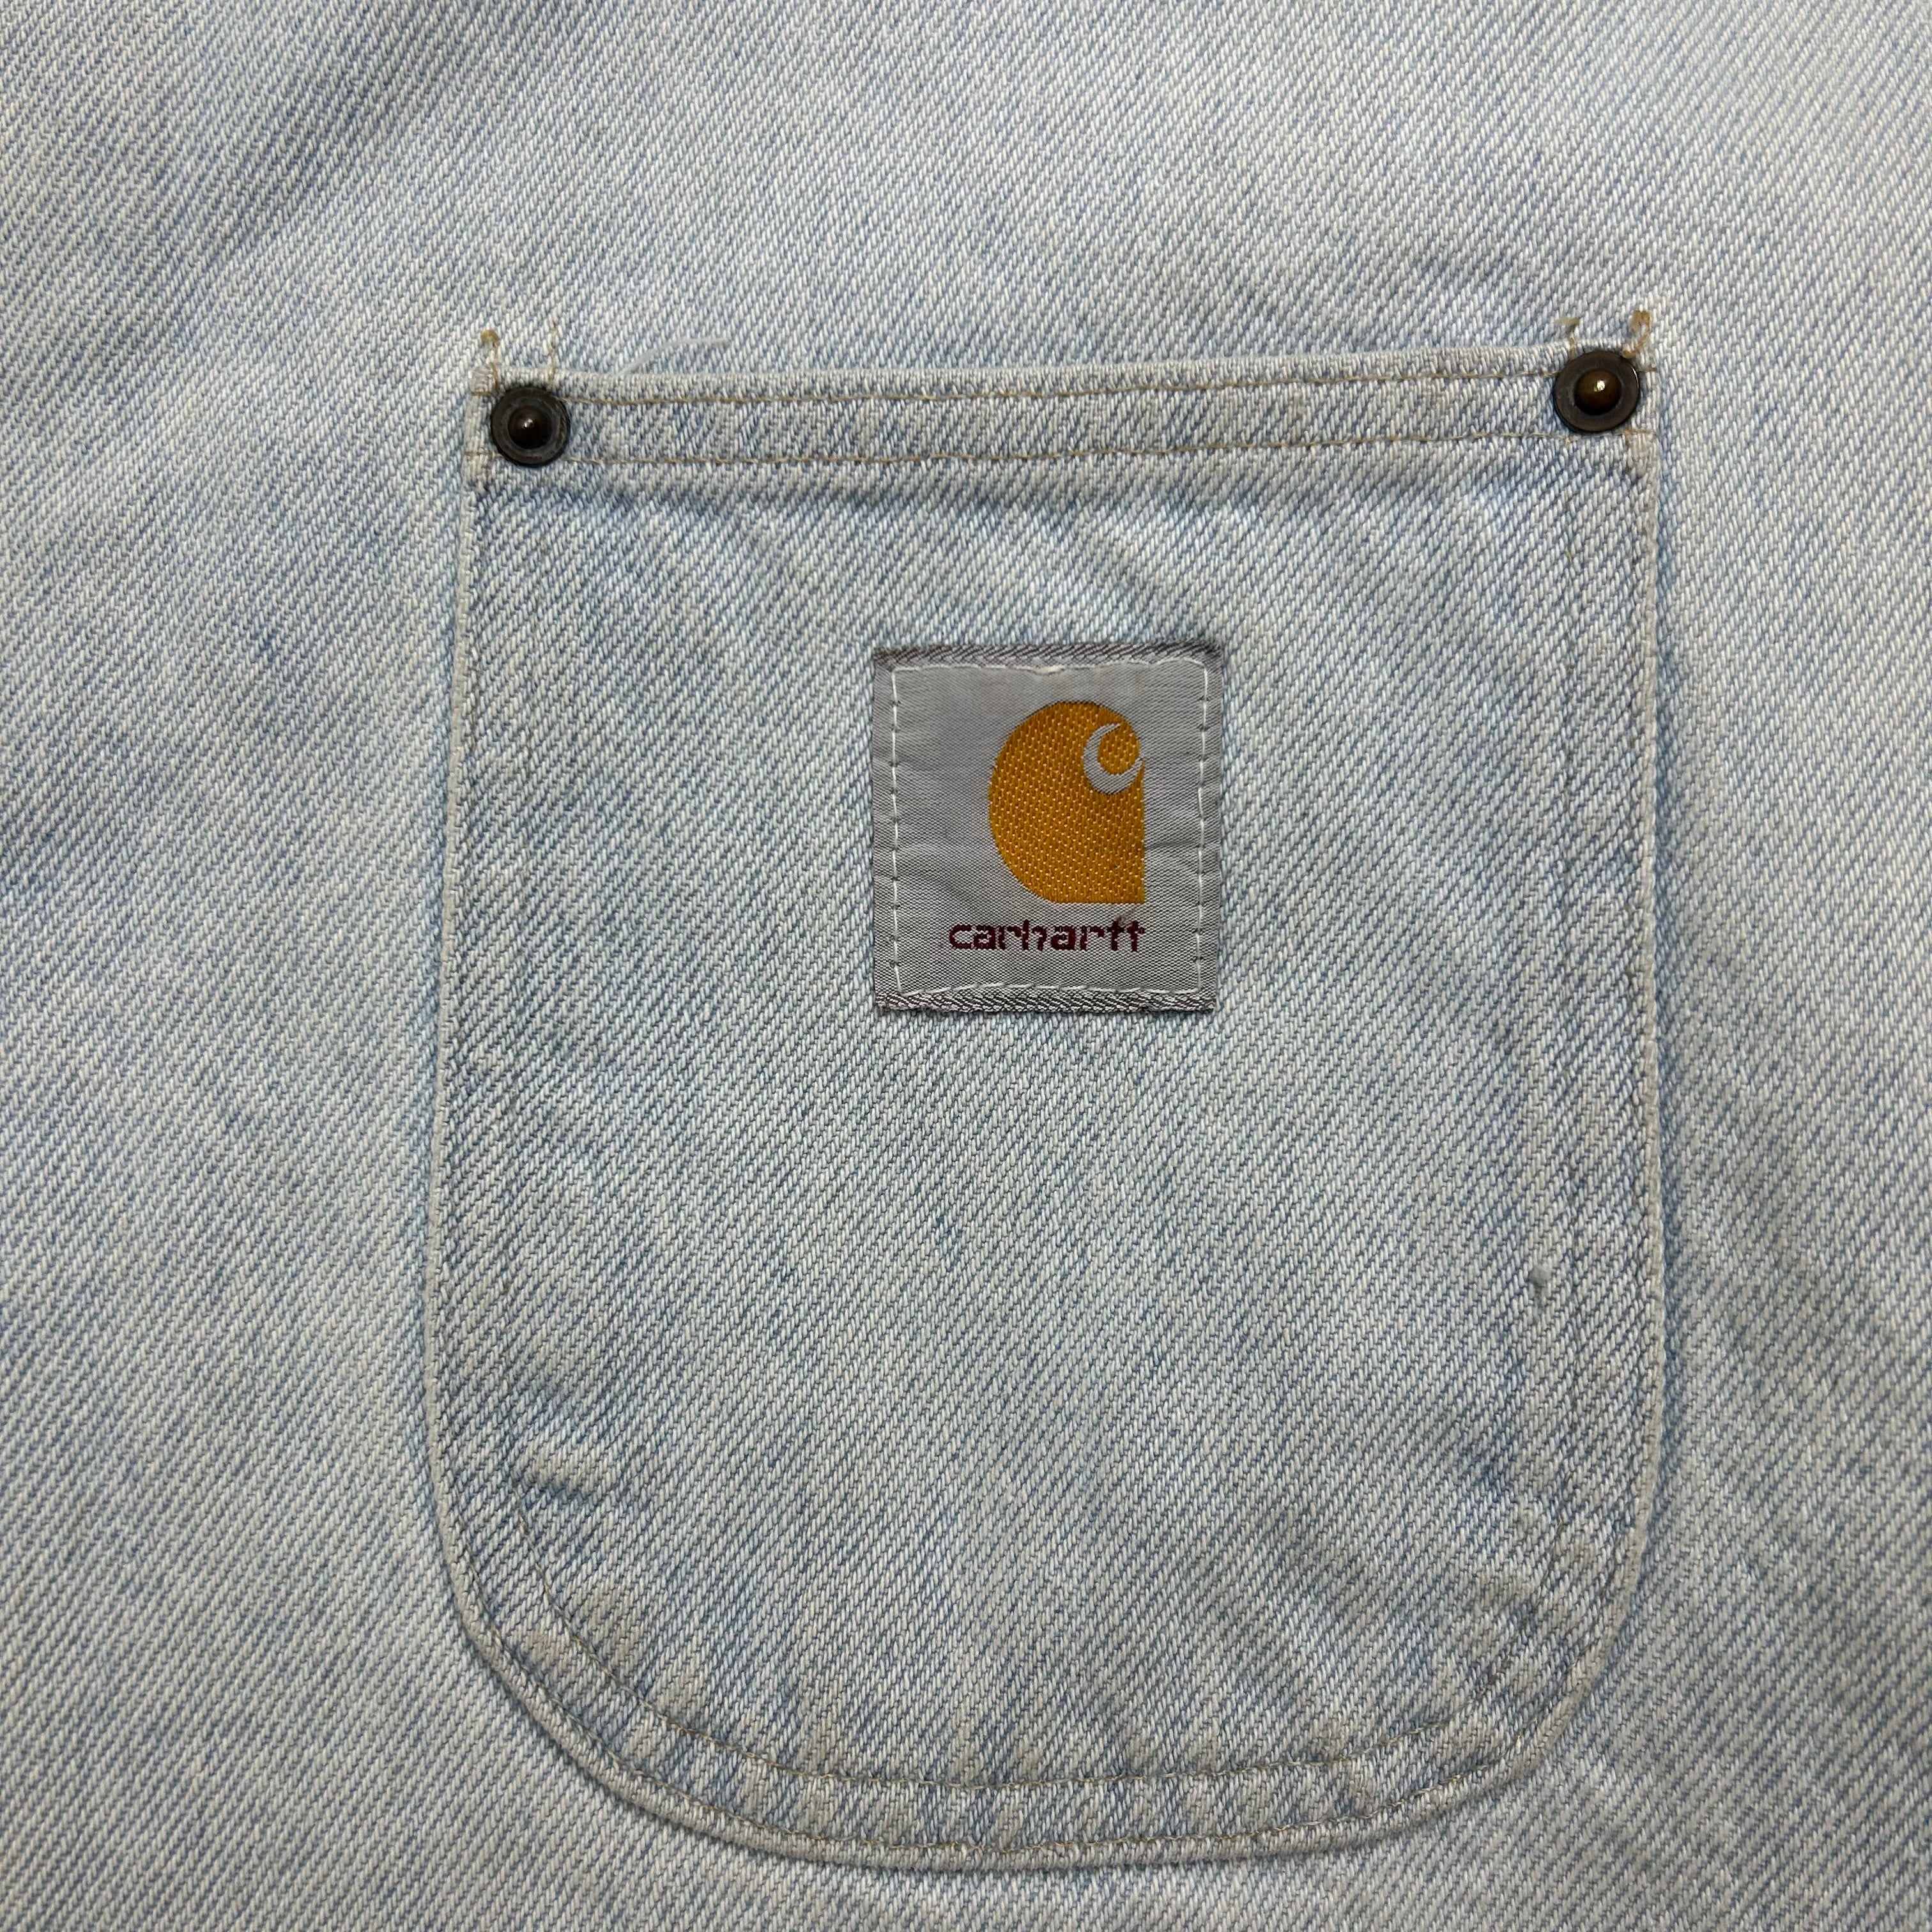 Vintage Carhartt Washed Denim Chore Jacket